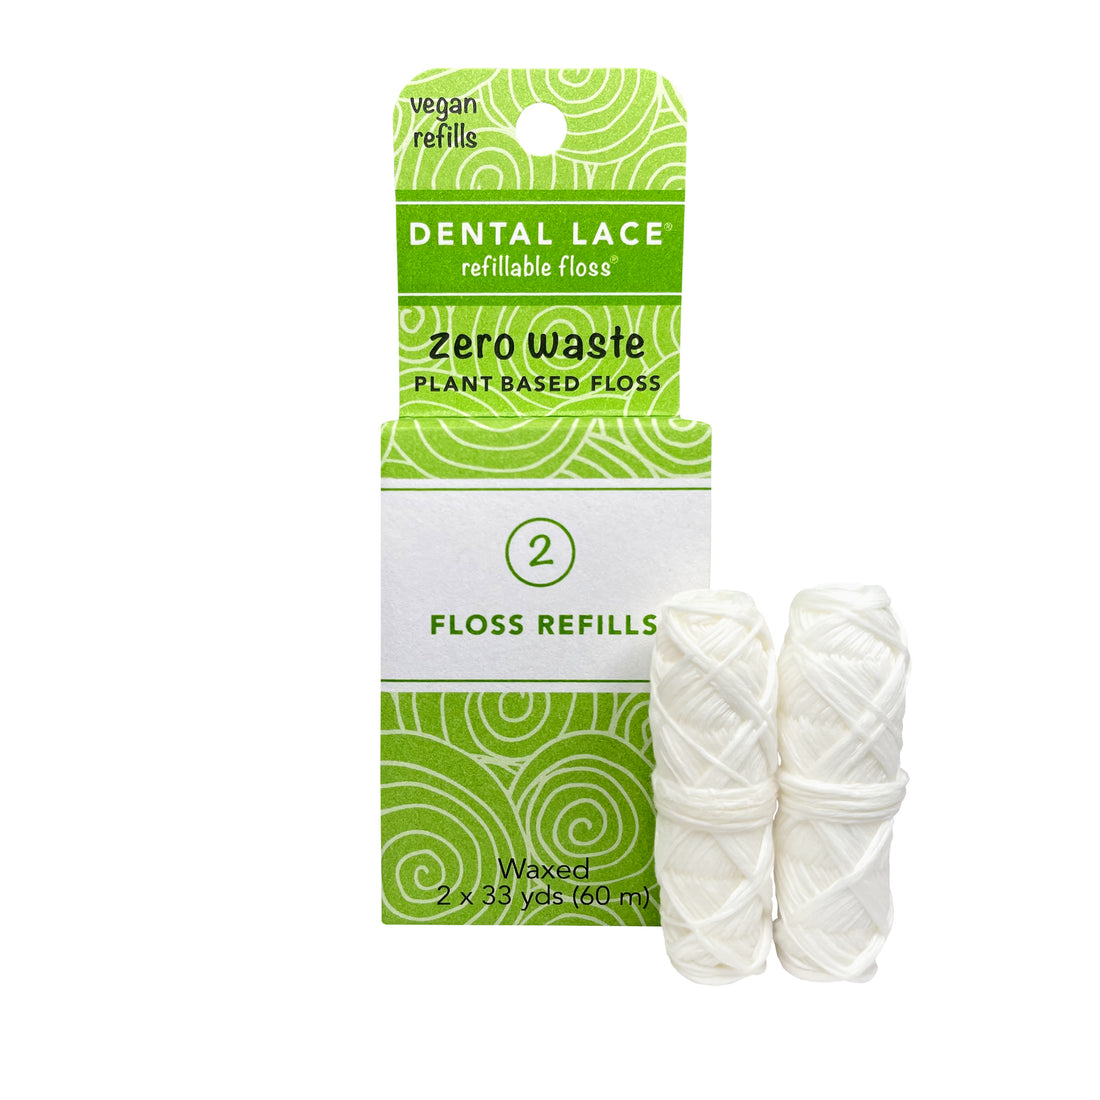 Dental Lace Zero Waste Plant Based Vegan Floss Refills (4 Month Supply)